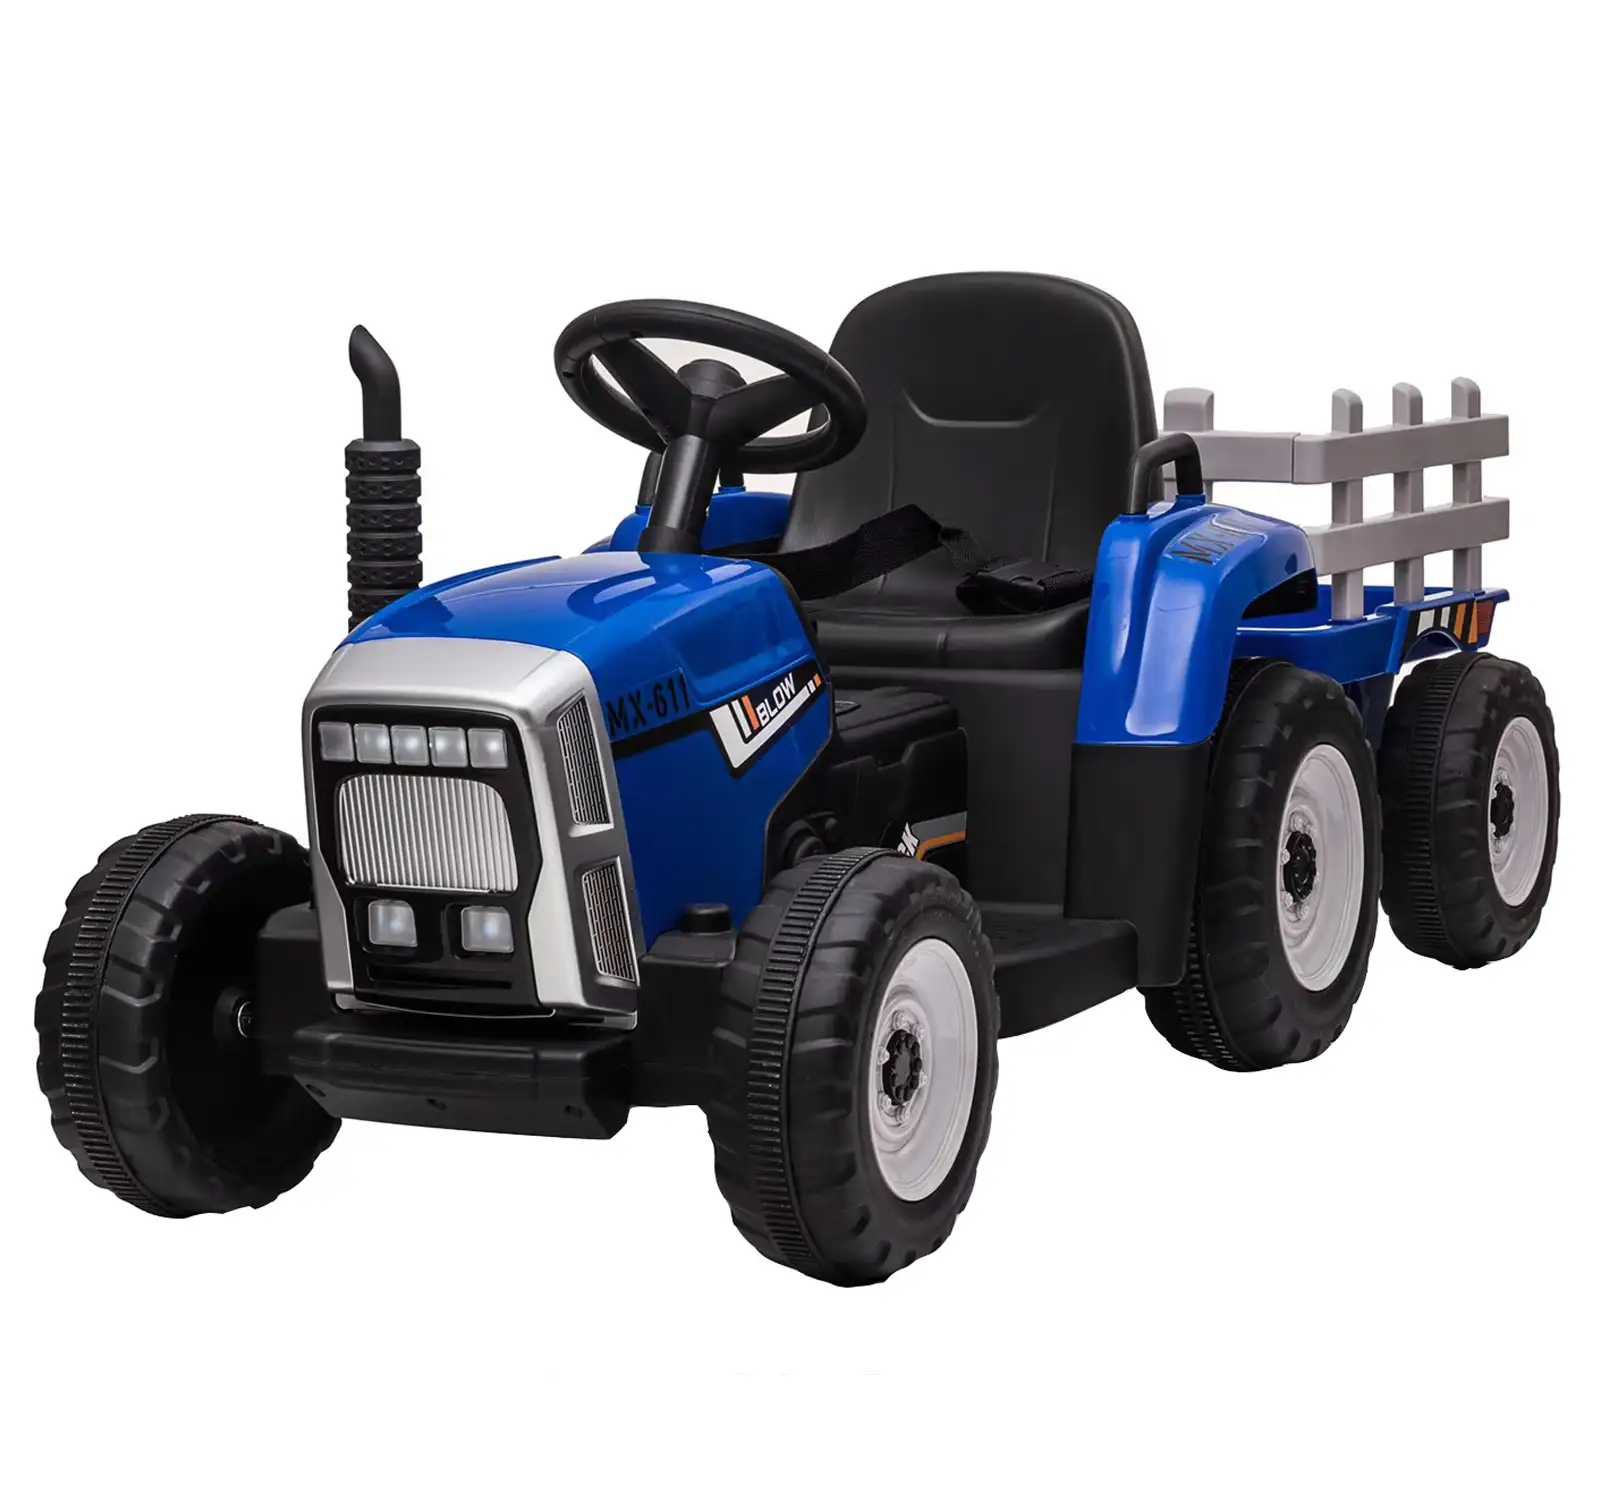 Kinder pedal traktoren fahren auf Auto Elektro traktor für Kinder fahren mit Eimer für Kinder